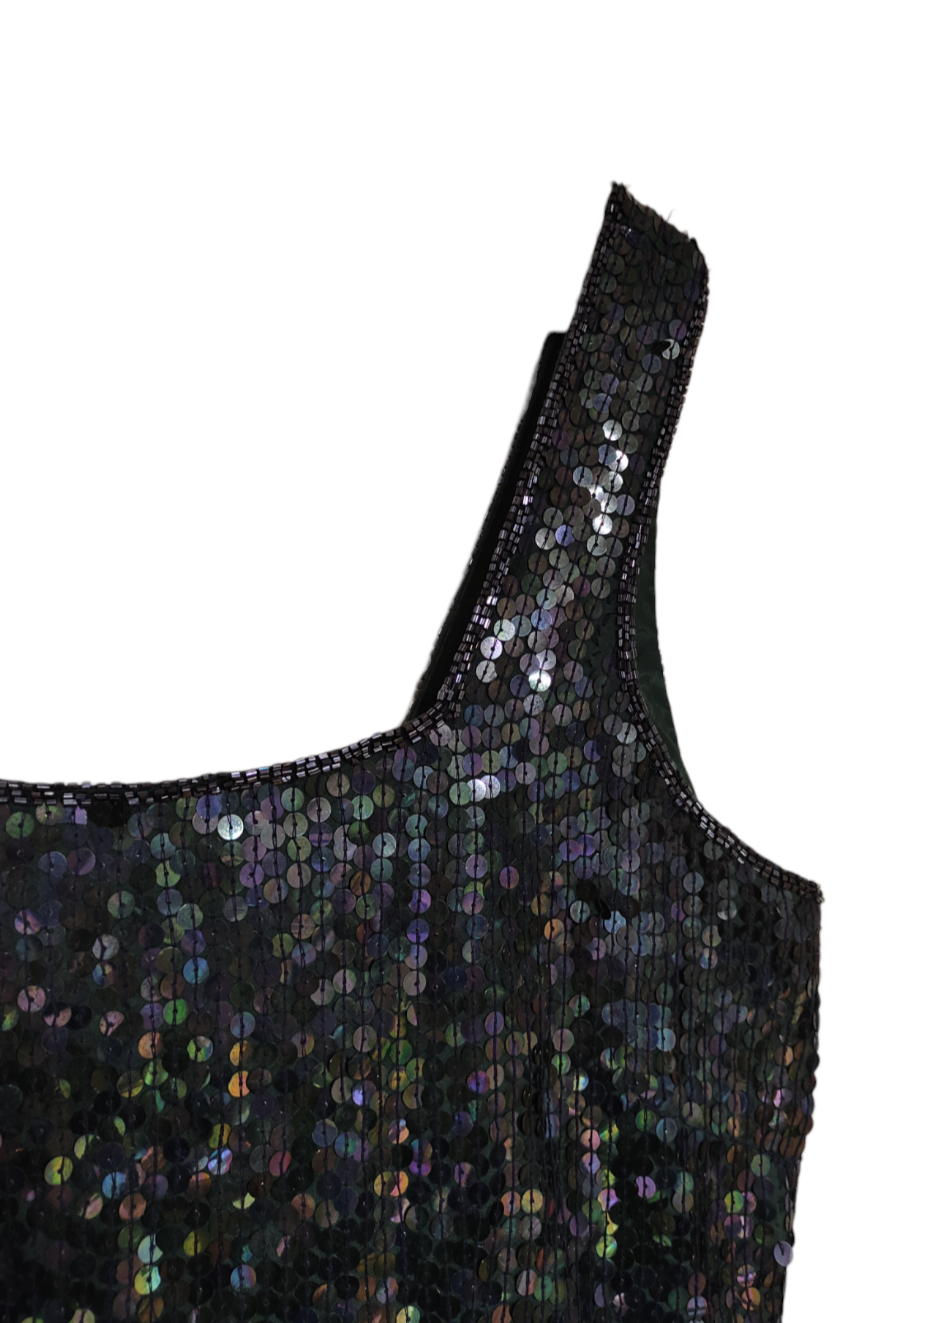 Midi Βραδινό Φόρεμα DEBUT σε Κυπαρισσί Χρώμα με Παγιέτες (Small)